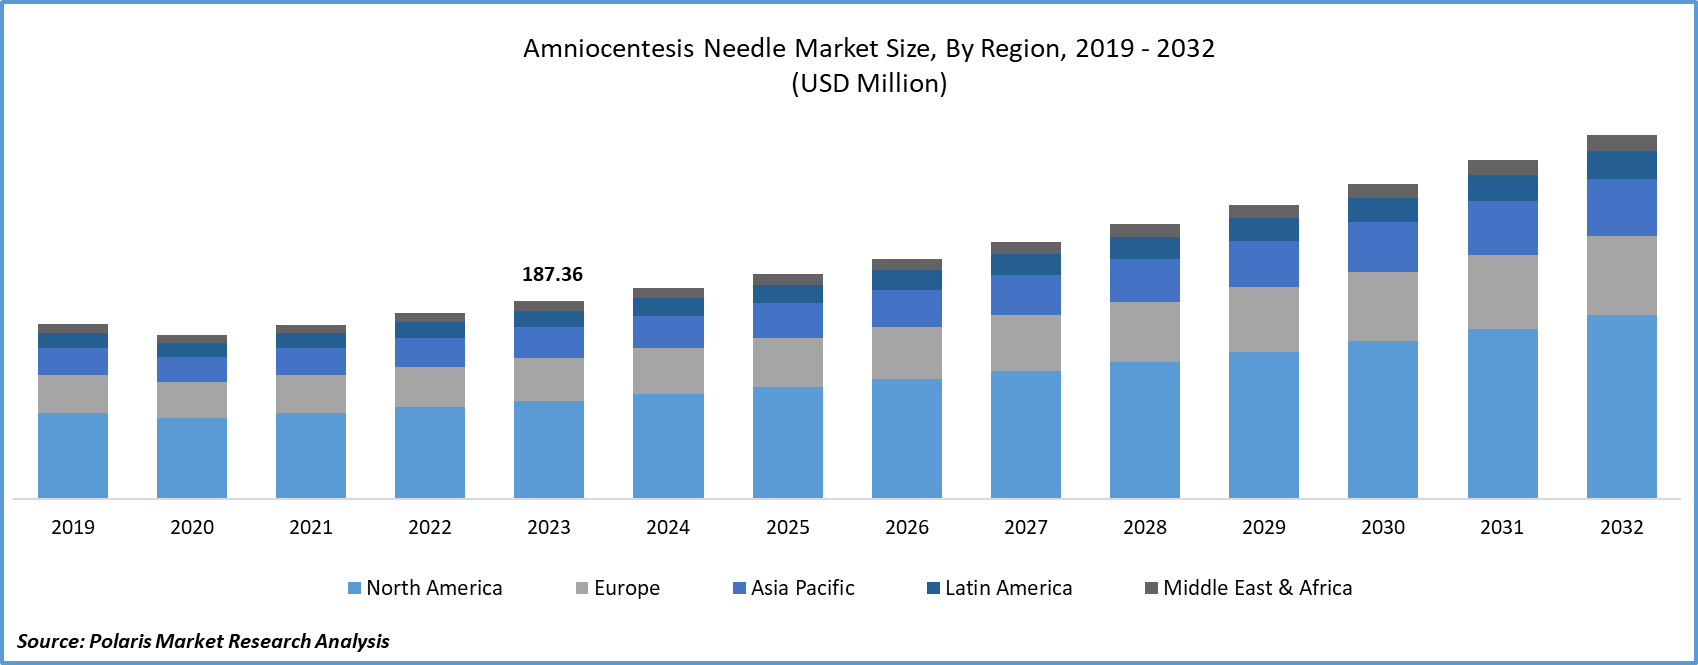 Amniocentesis Needle Market Size